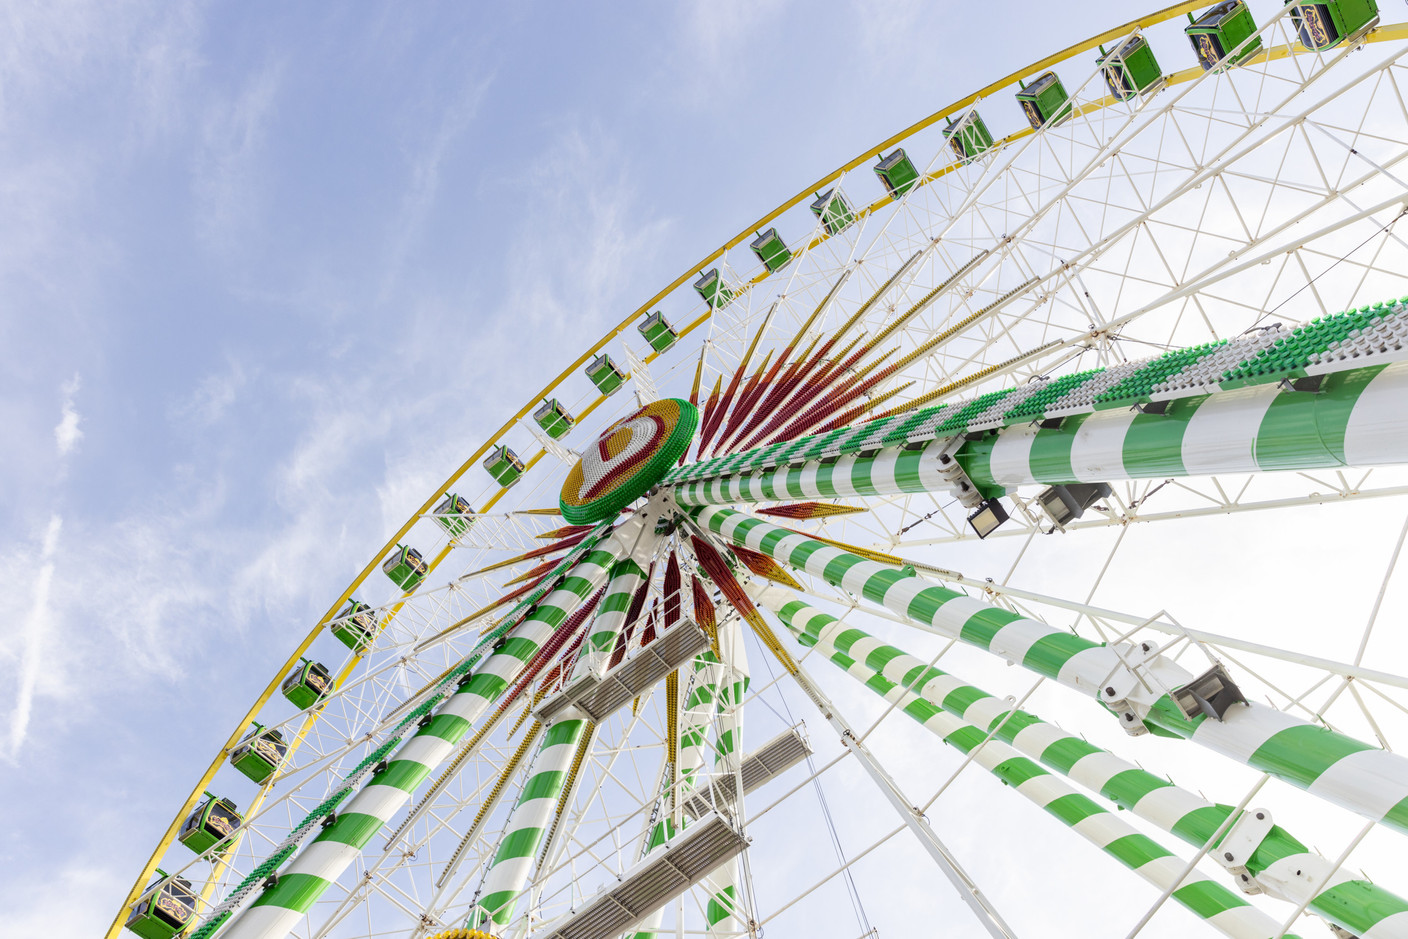 The legendary Ferris wheel is present. Photo: Romain Gamba/Maison Moderne